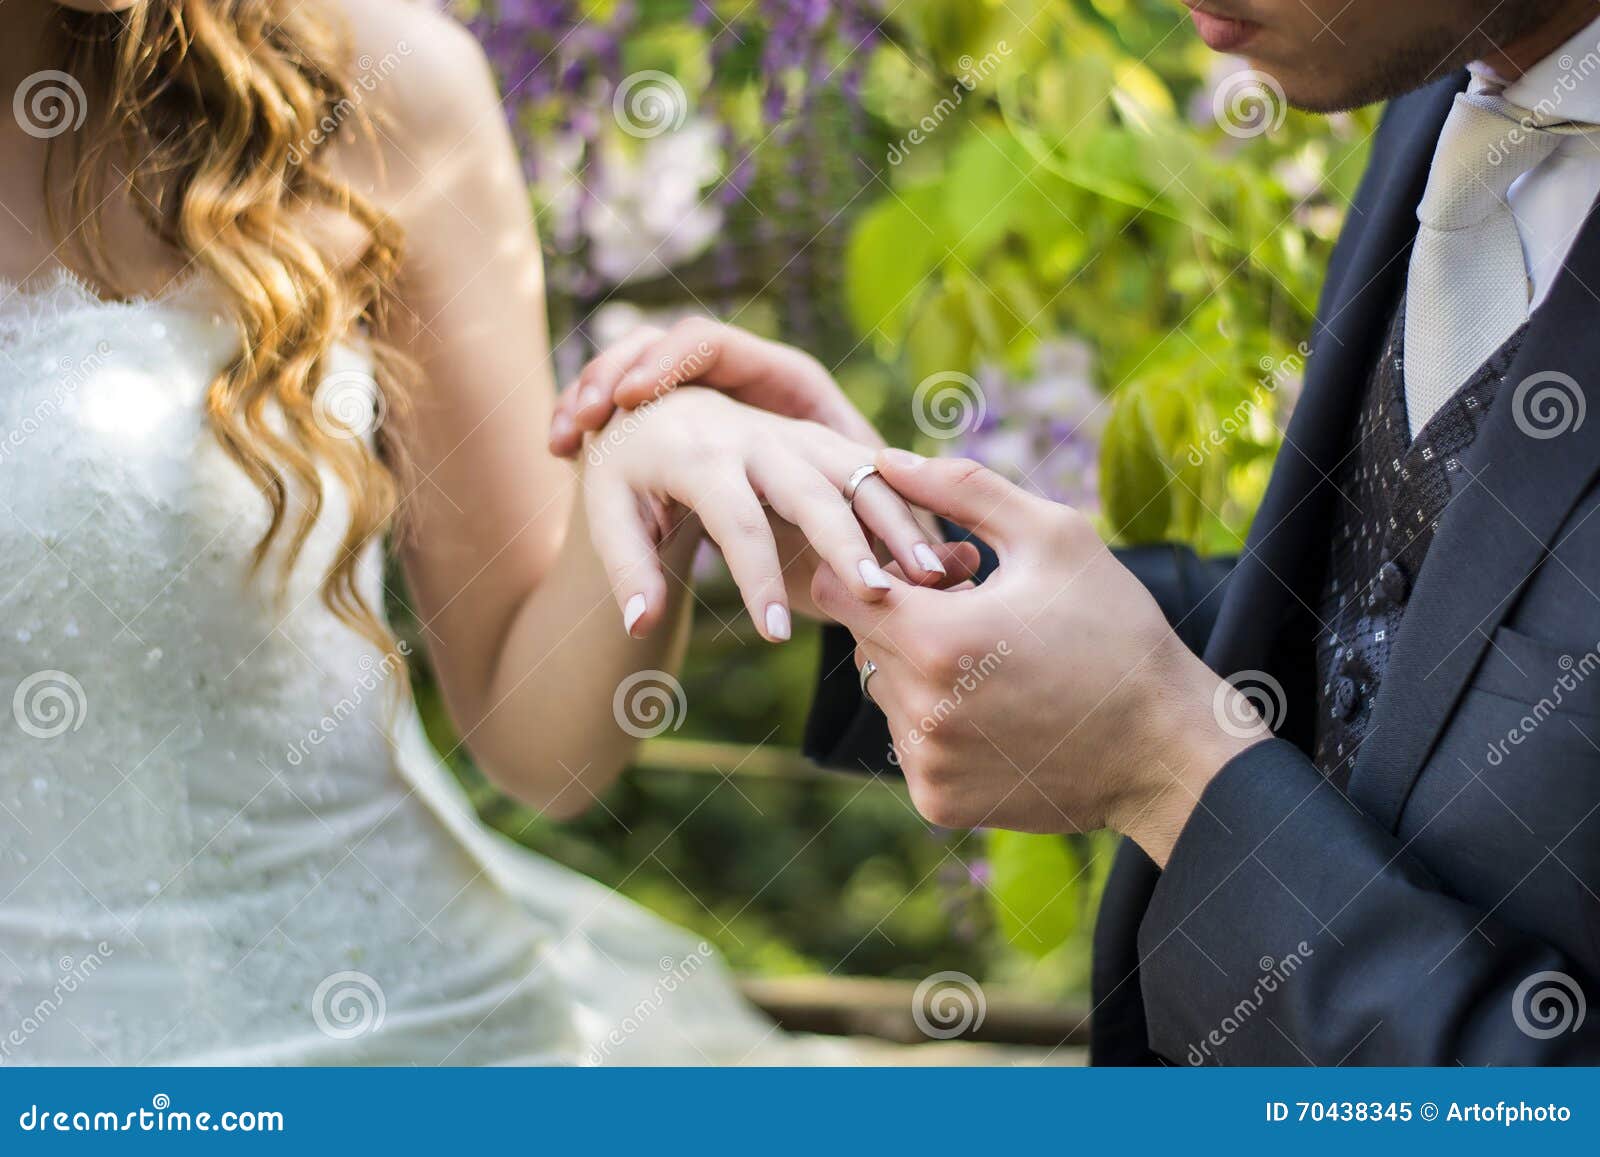 Close Up Of Bridegroom Wearing Wedding Ring On Bride S Finger Stock